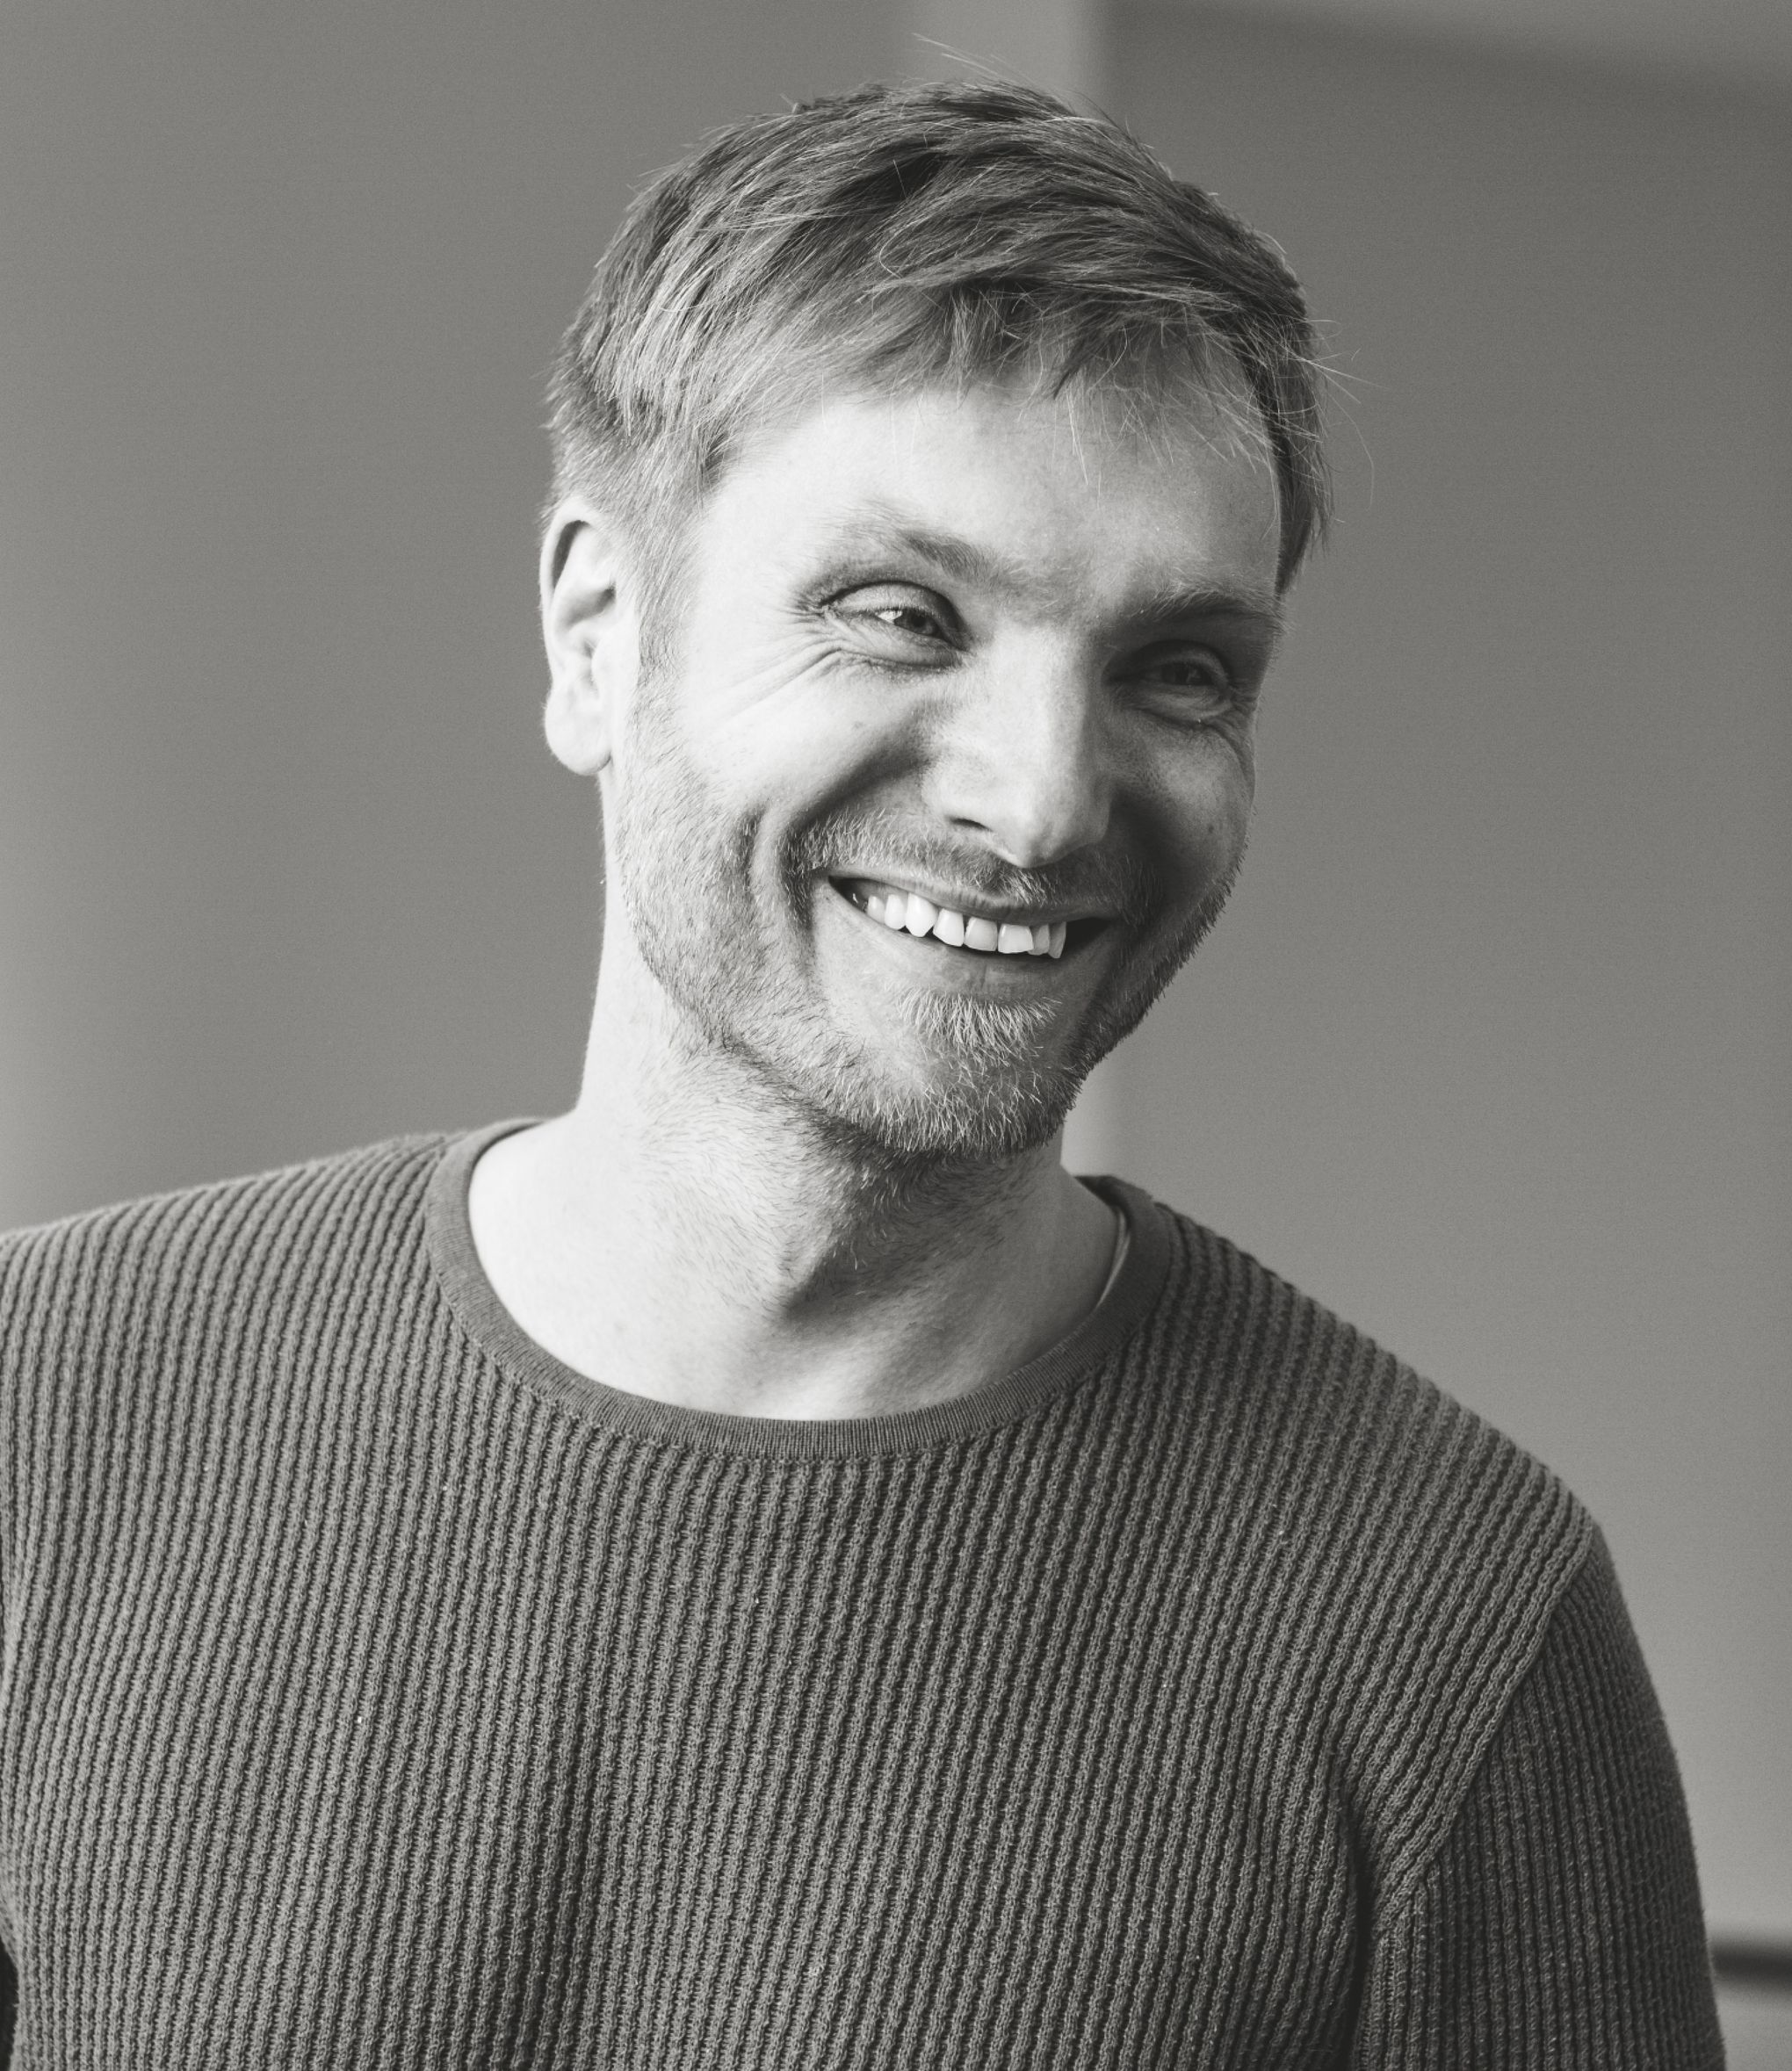 Co-founder and development lead, Steffen Hänsch, smiling